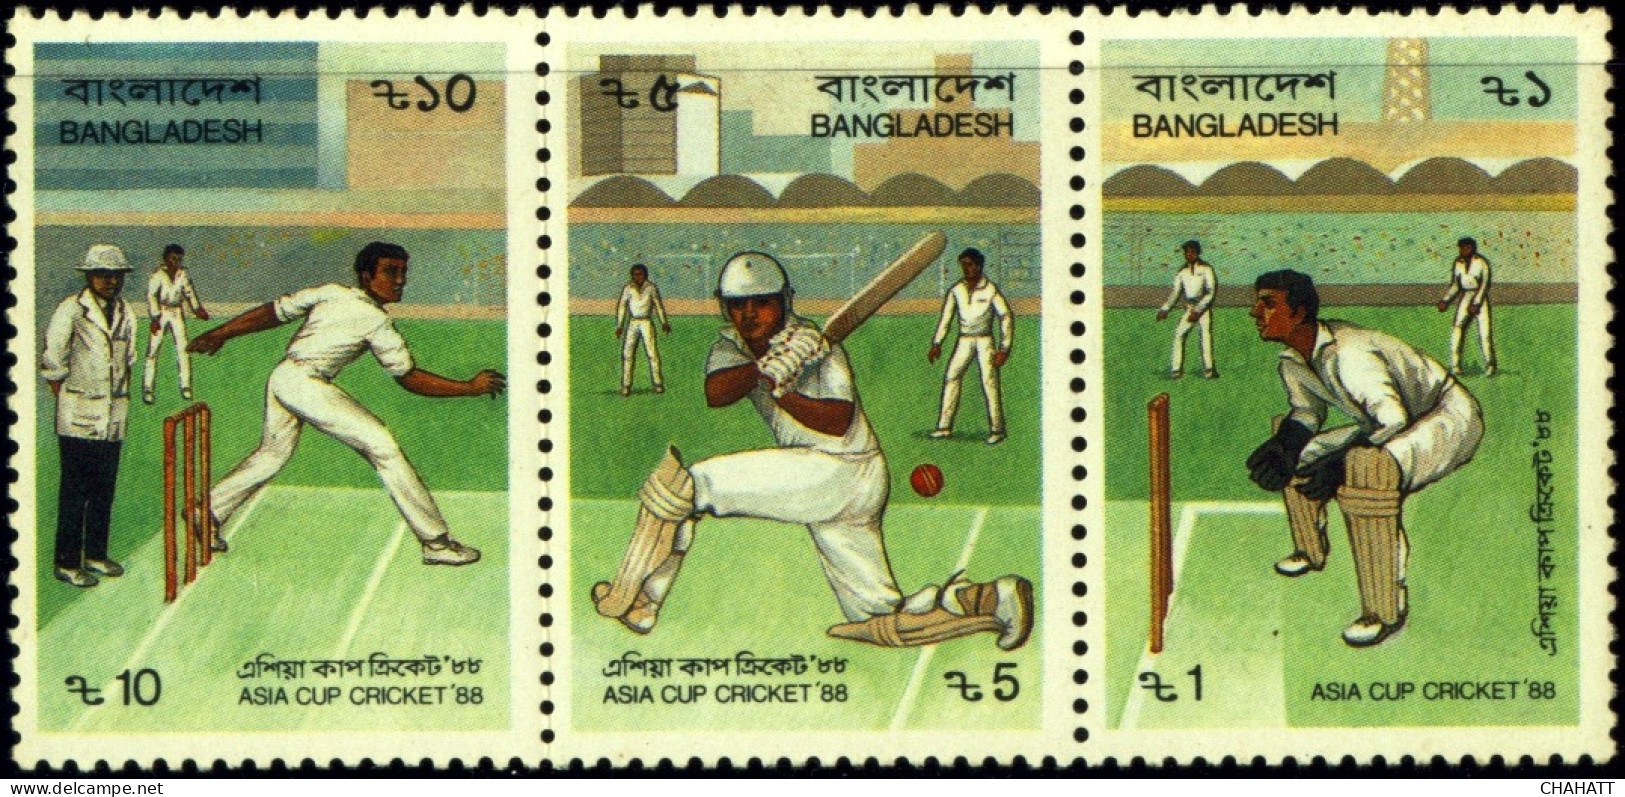 SPORTS- CRICKET- ASIA CUP 1988- SETEANT SET OF 3- BANGLADESH- MNH- -A5-105 - Cricket